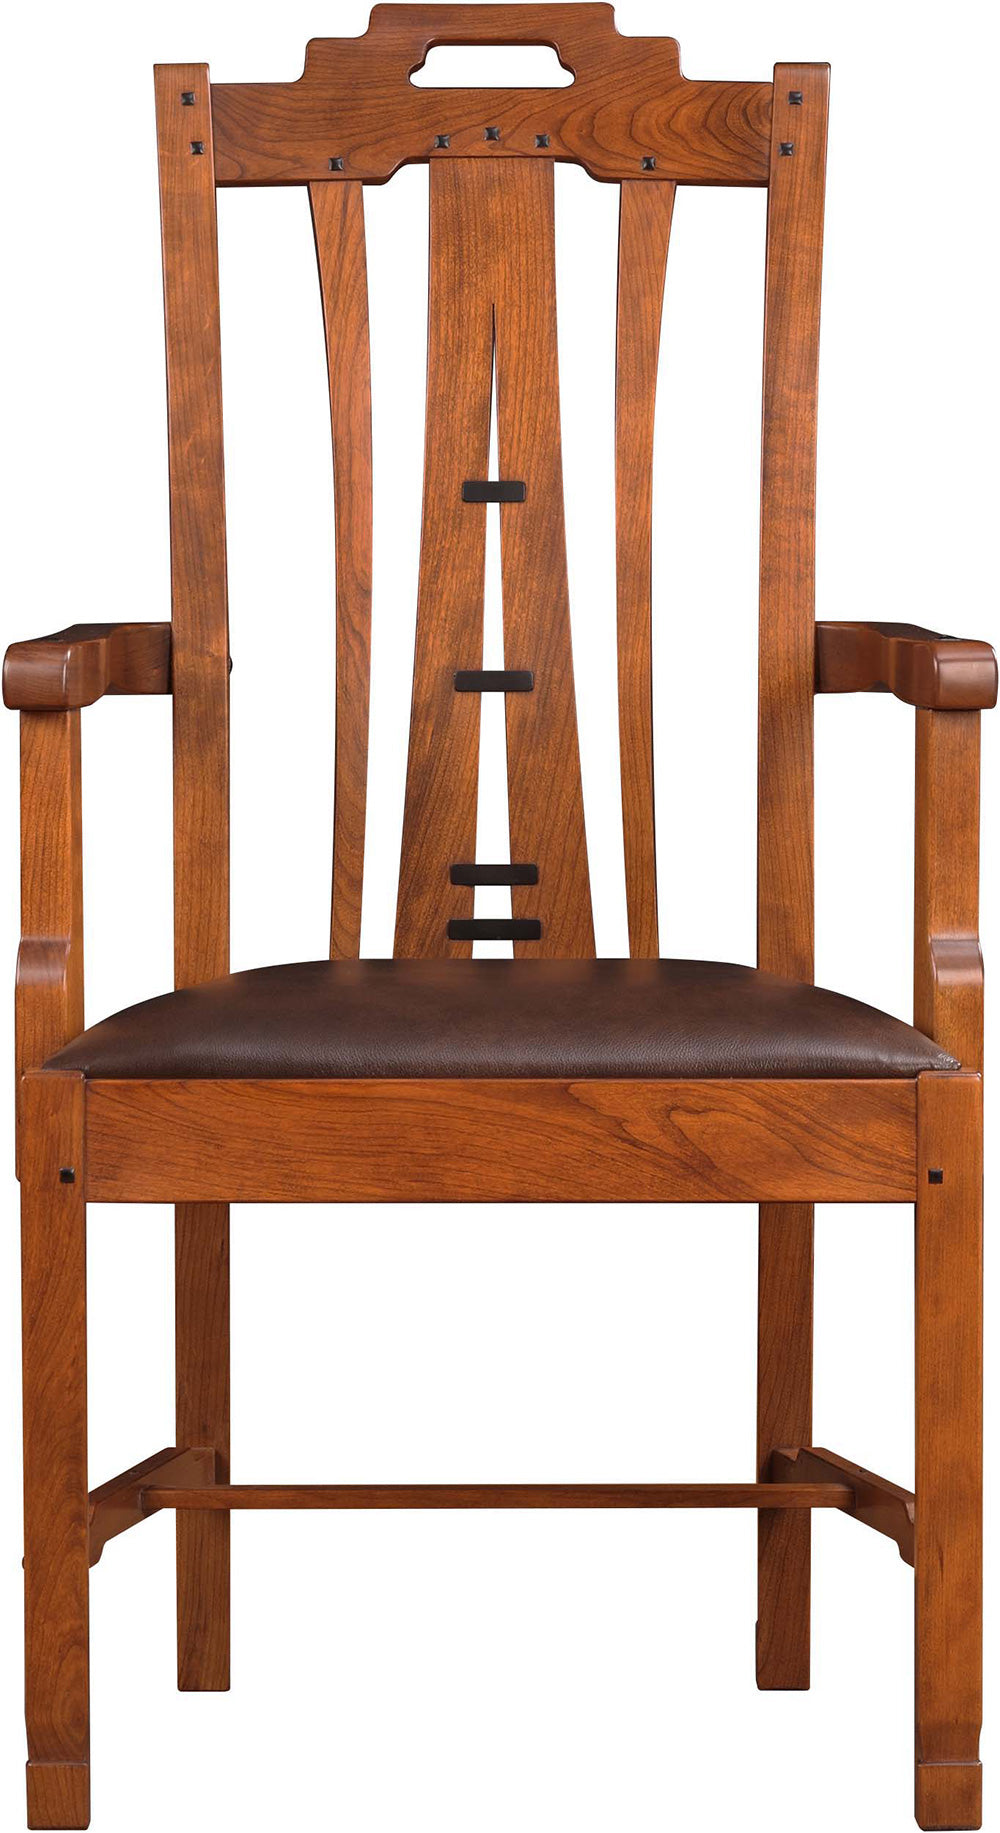 East Colorado Arm Chair - Stickley Furniture | Mattress